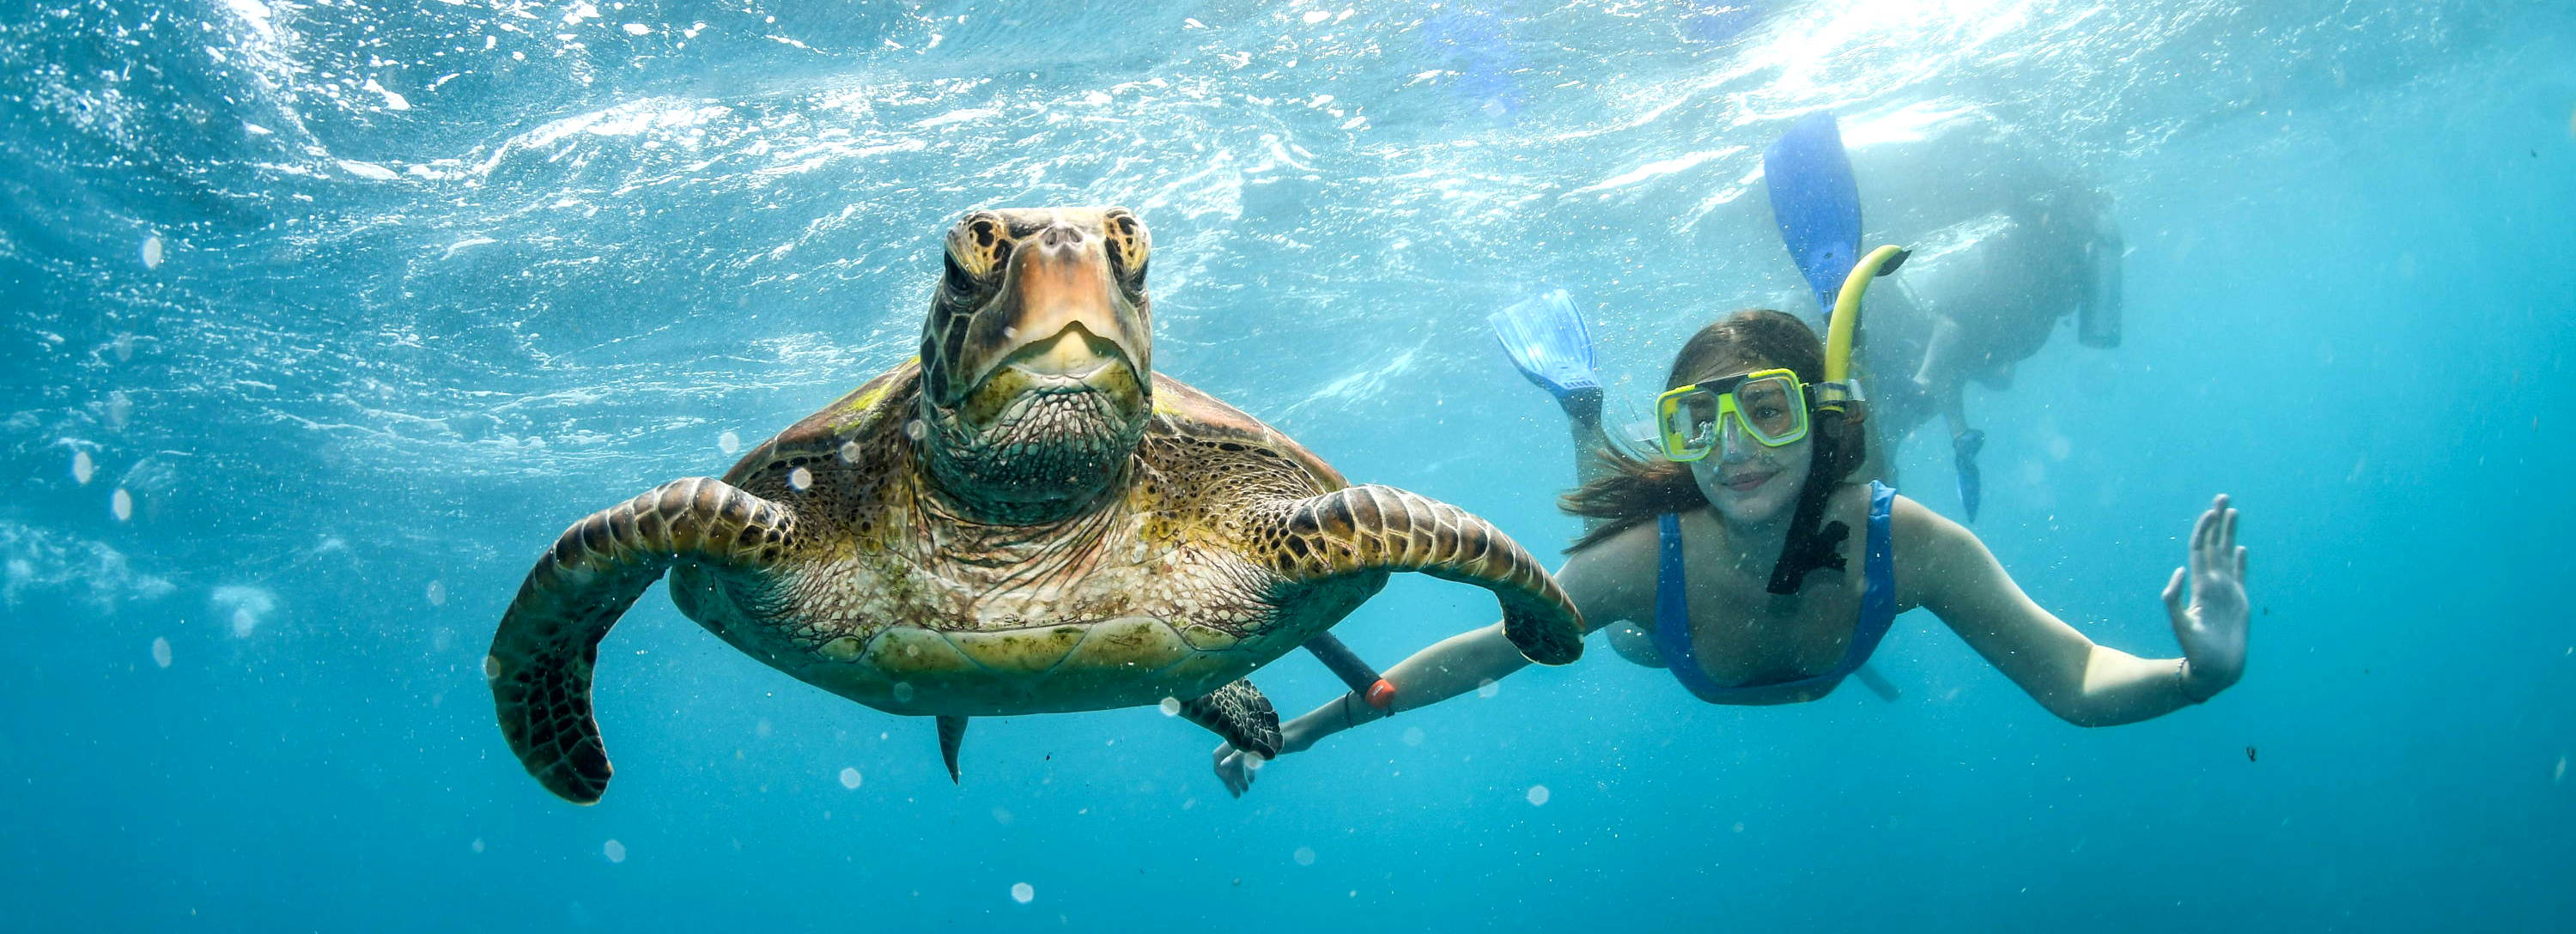 Girl snorkelling with sea turtle in blue ocean water